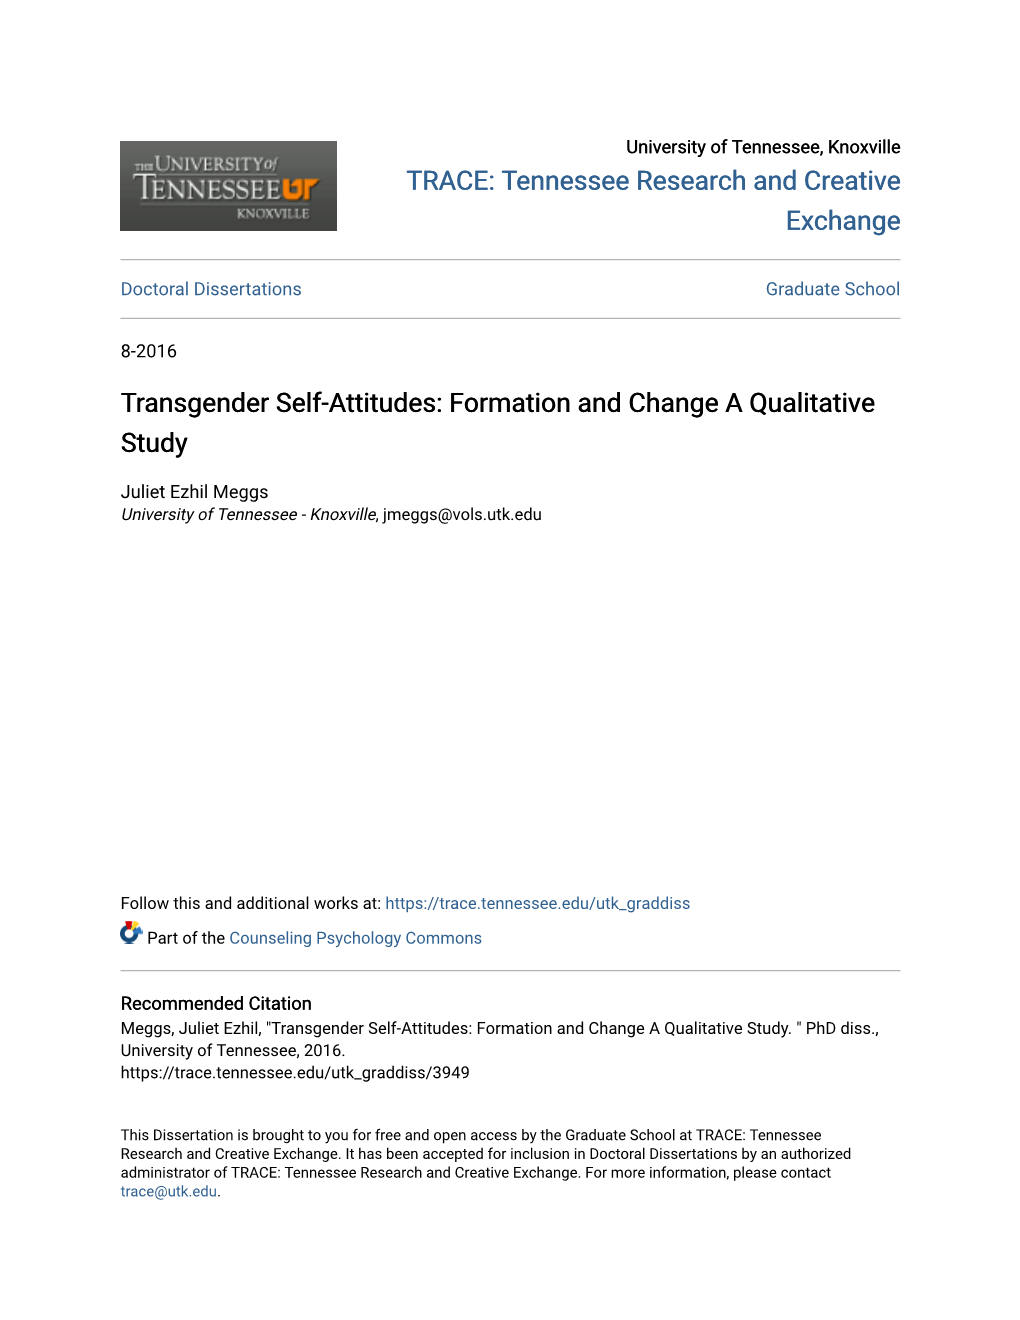 Transgender Self-Attitudes: Formation and Change a Qualitative Study